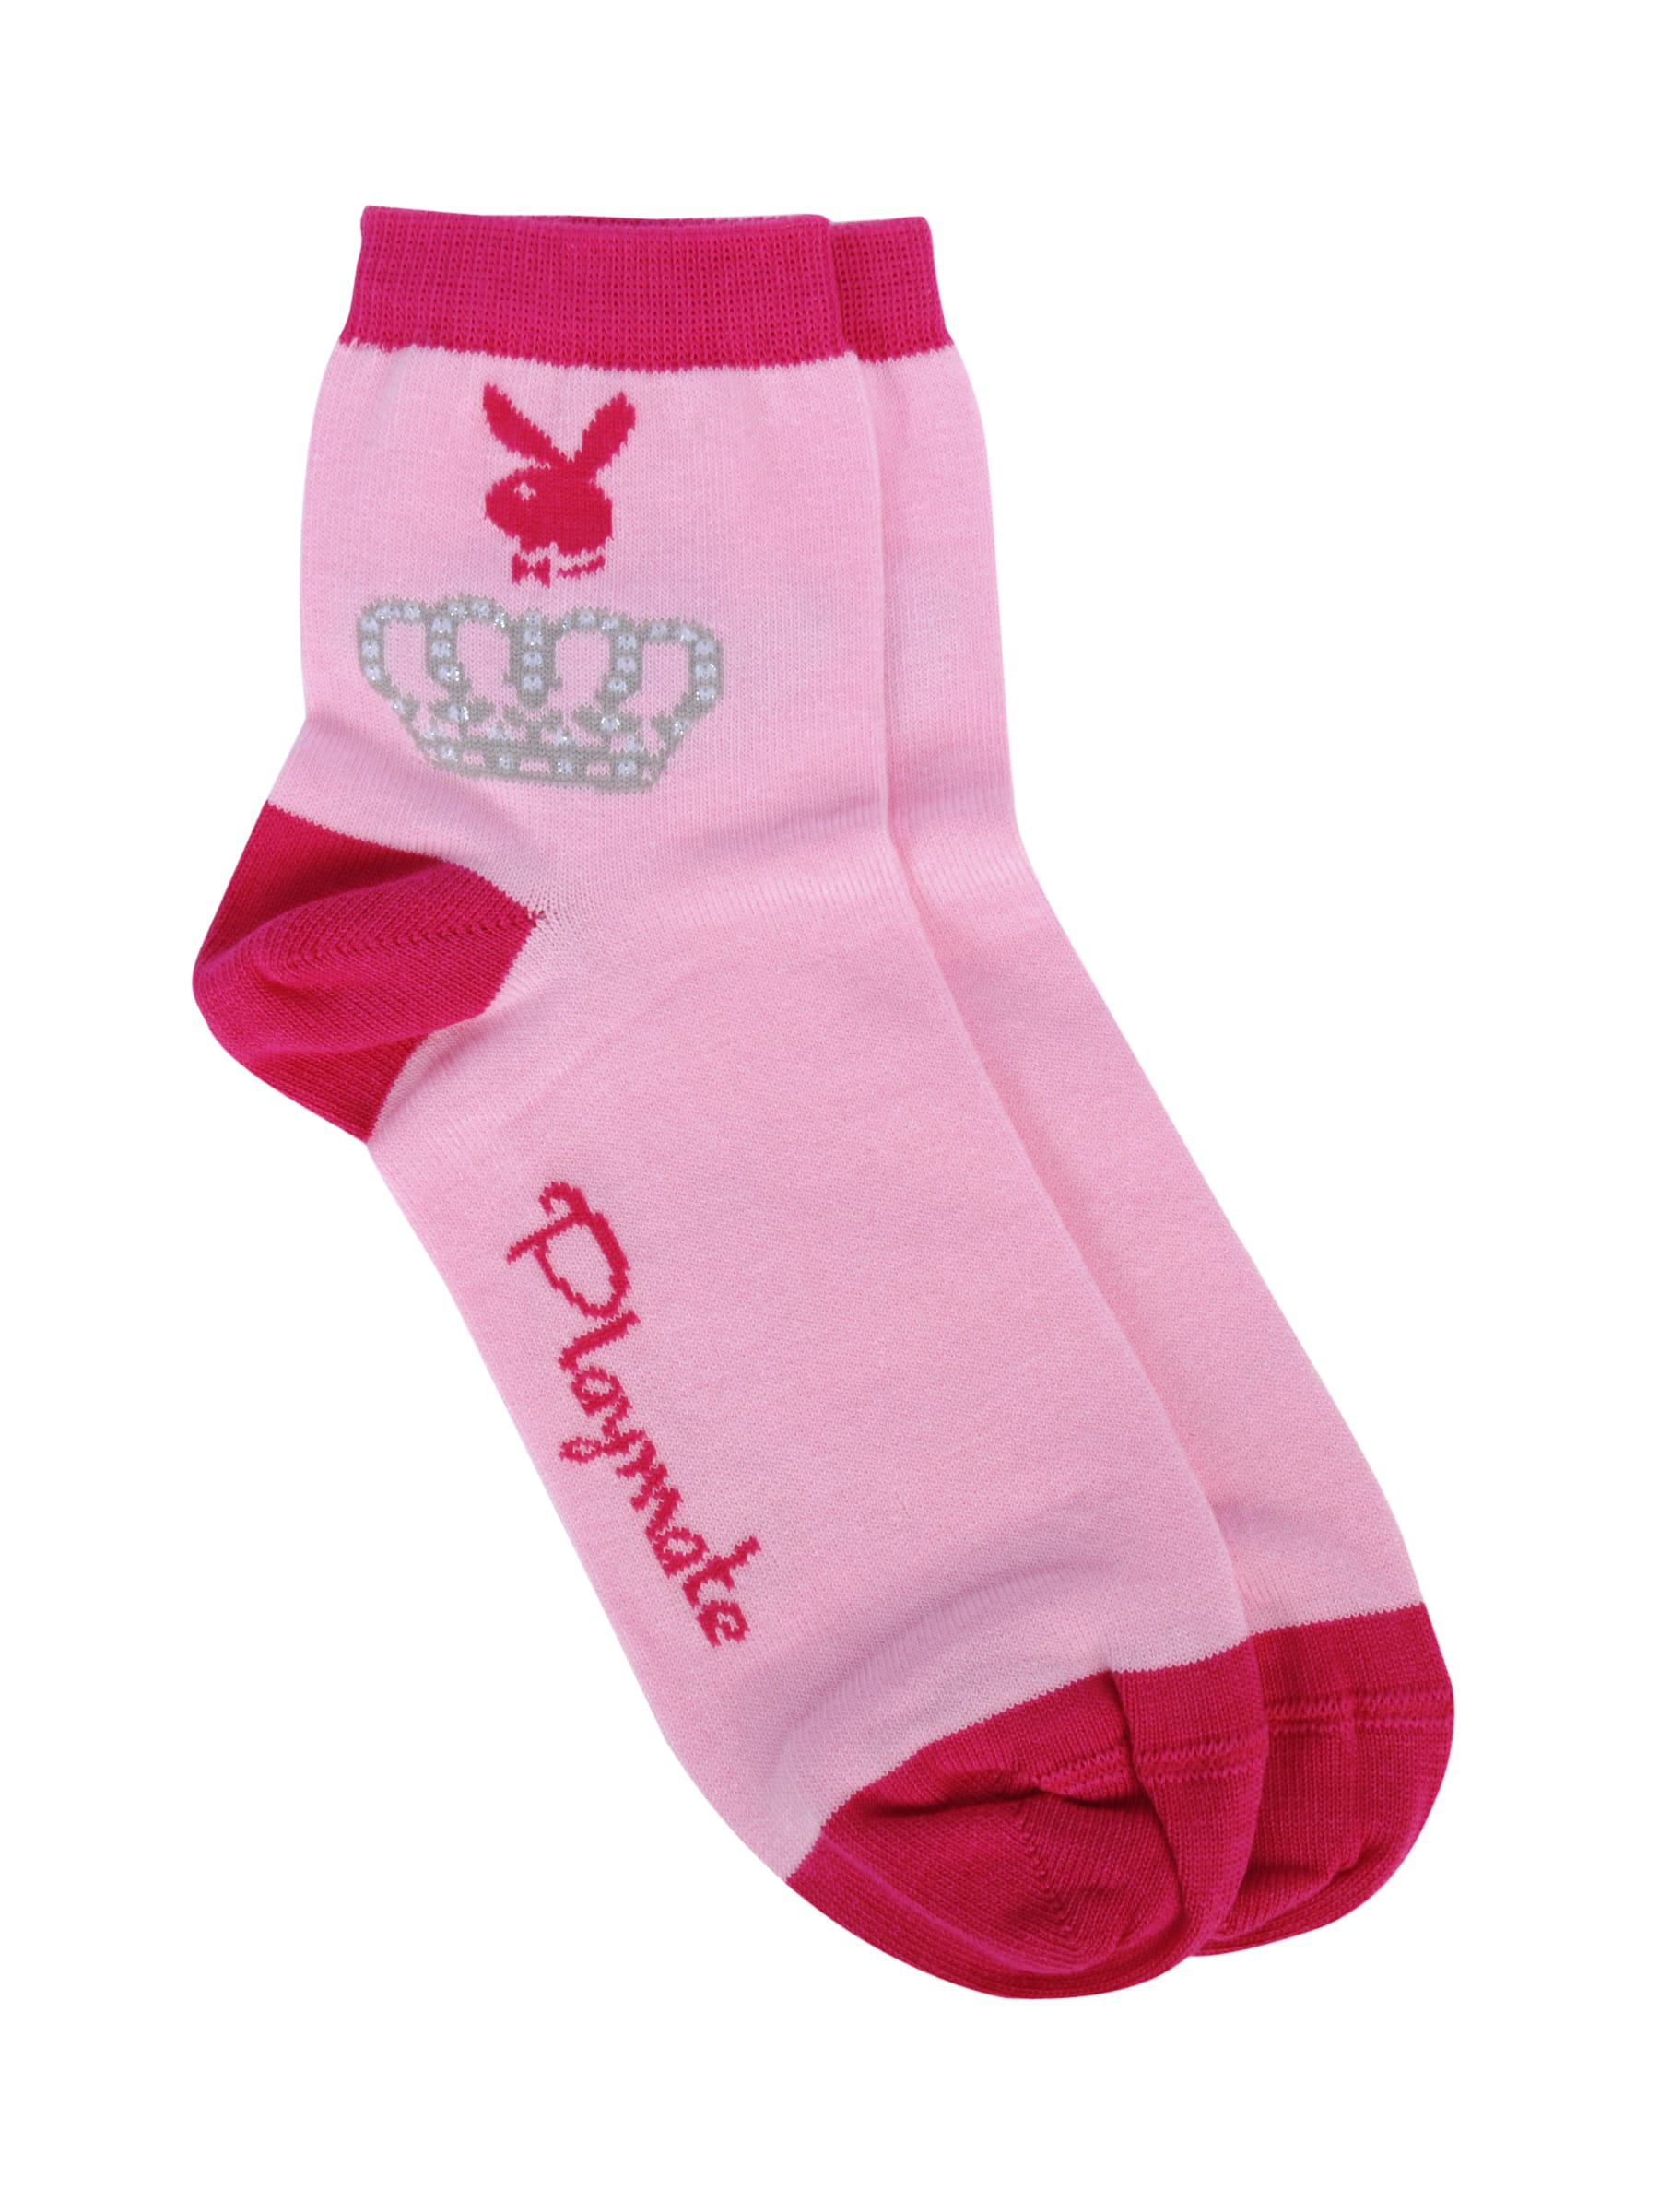 Playboy Women Playmate Pink Ankle Socks